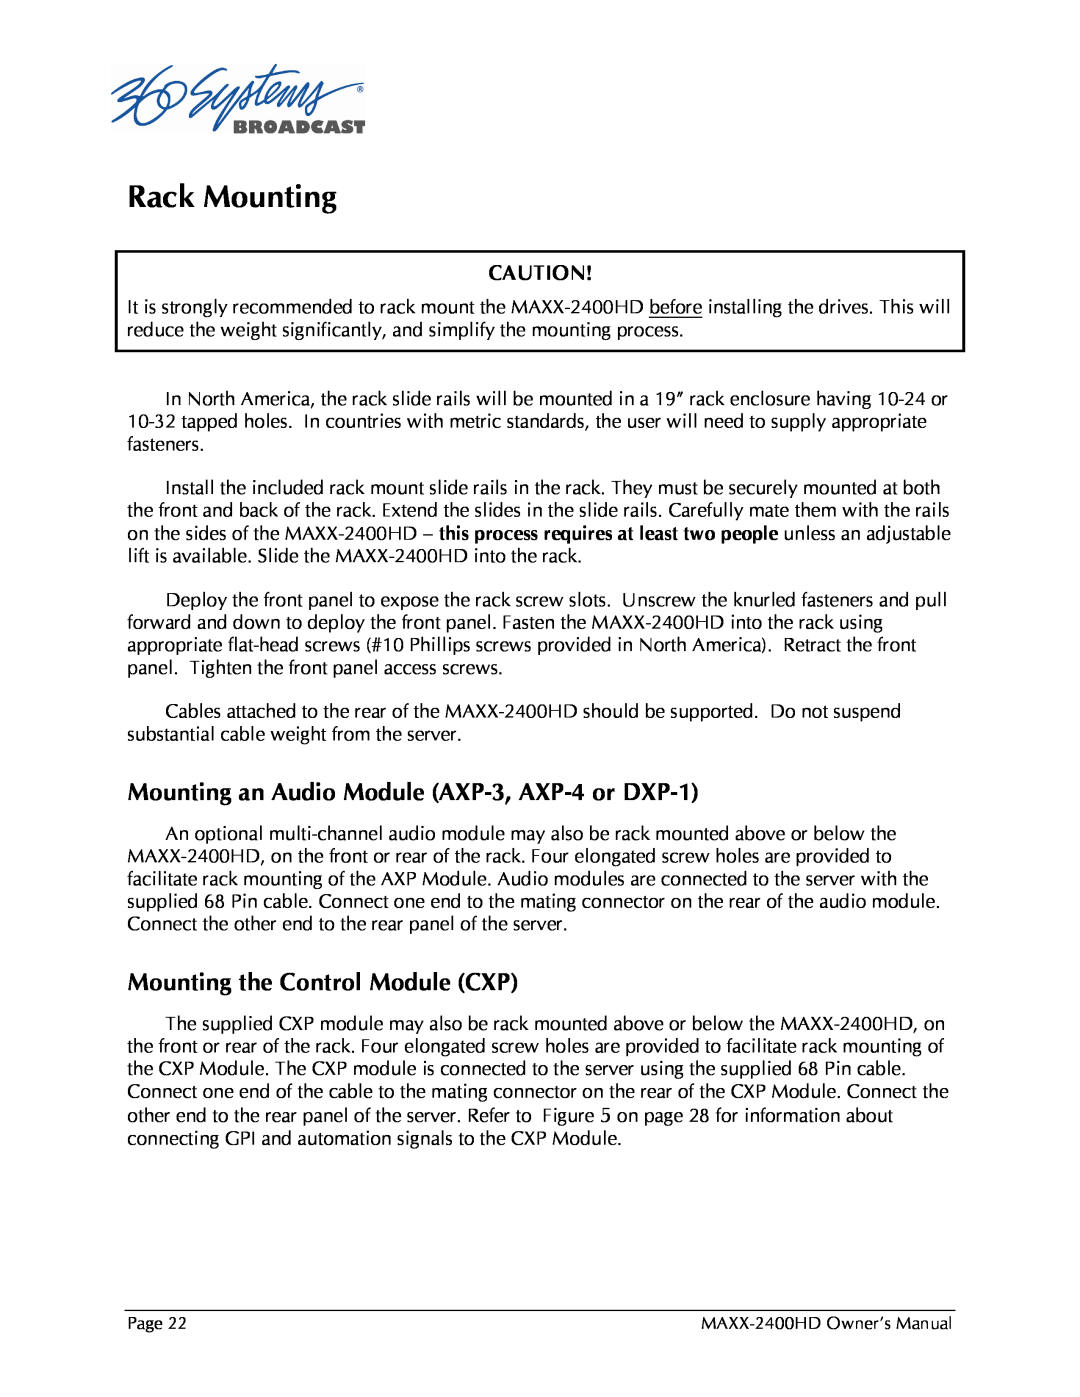 Maxxsonics MAXX-2400HD manual Rack Mounting, Mounting an Audio Module AXP-3, AXP-4or DXP-1, Mounting the Control Module CXP 